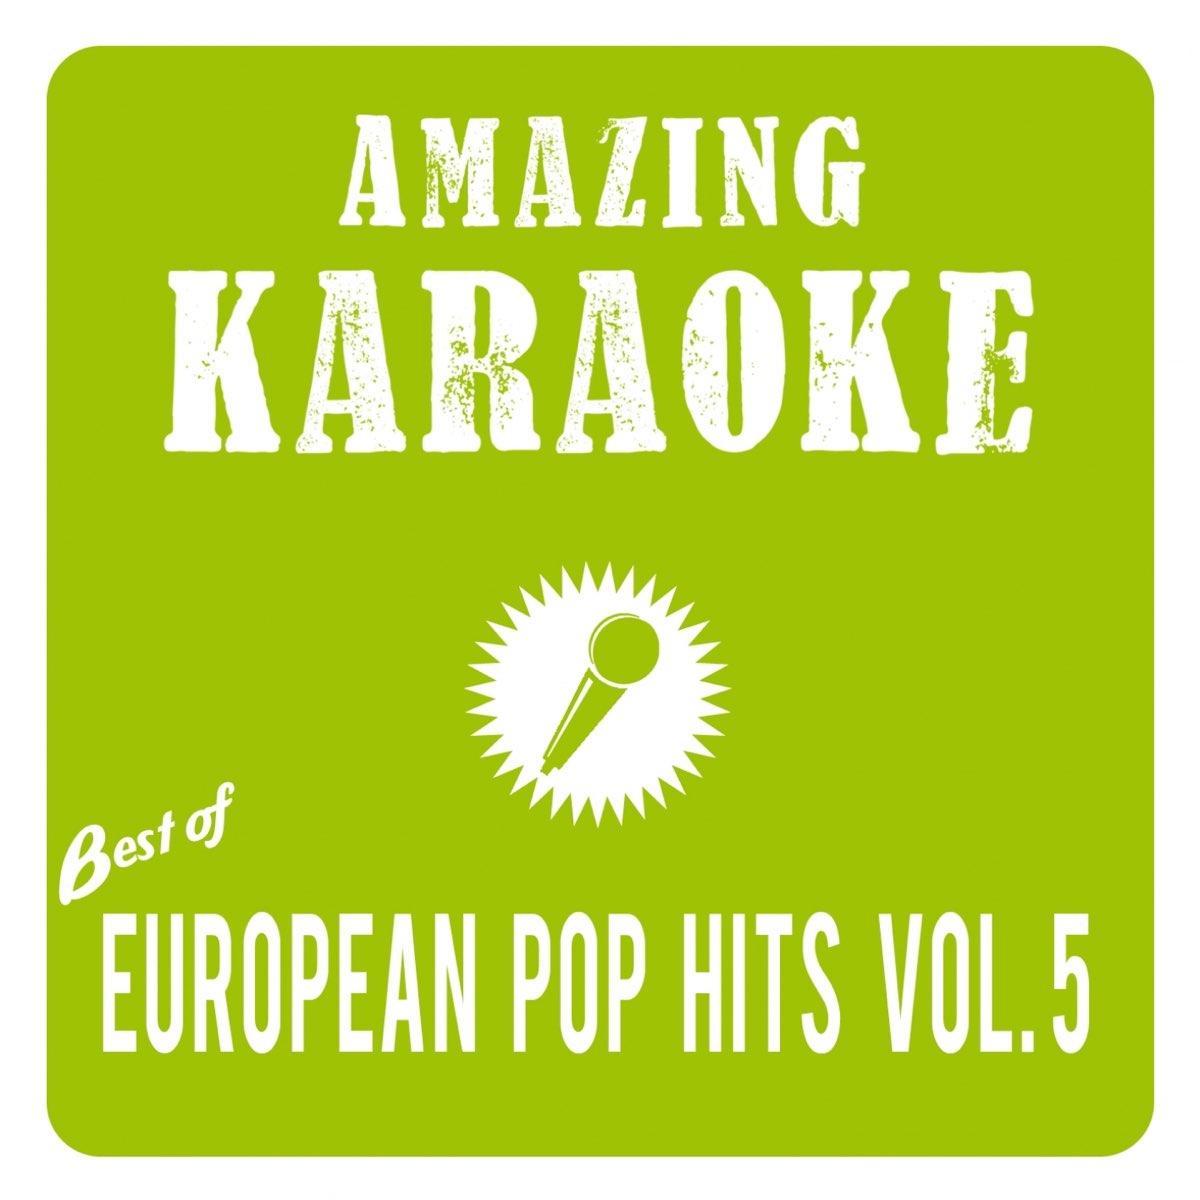 Best of European Pop Hits, Vol. 5 (Karaoke Version) by Amazing Karaoke on  Apple Music